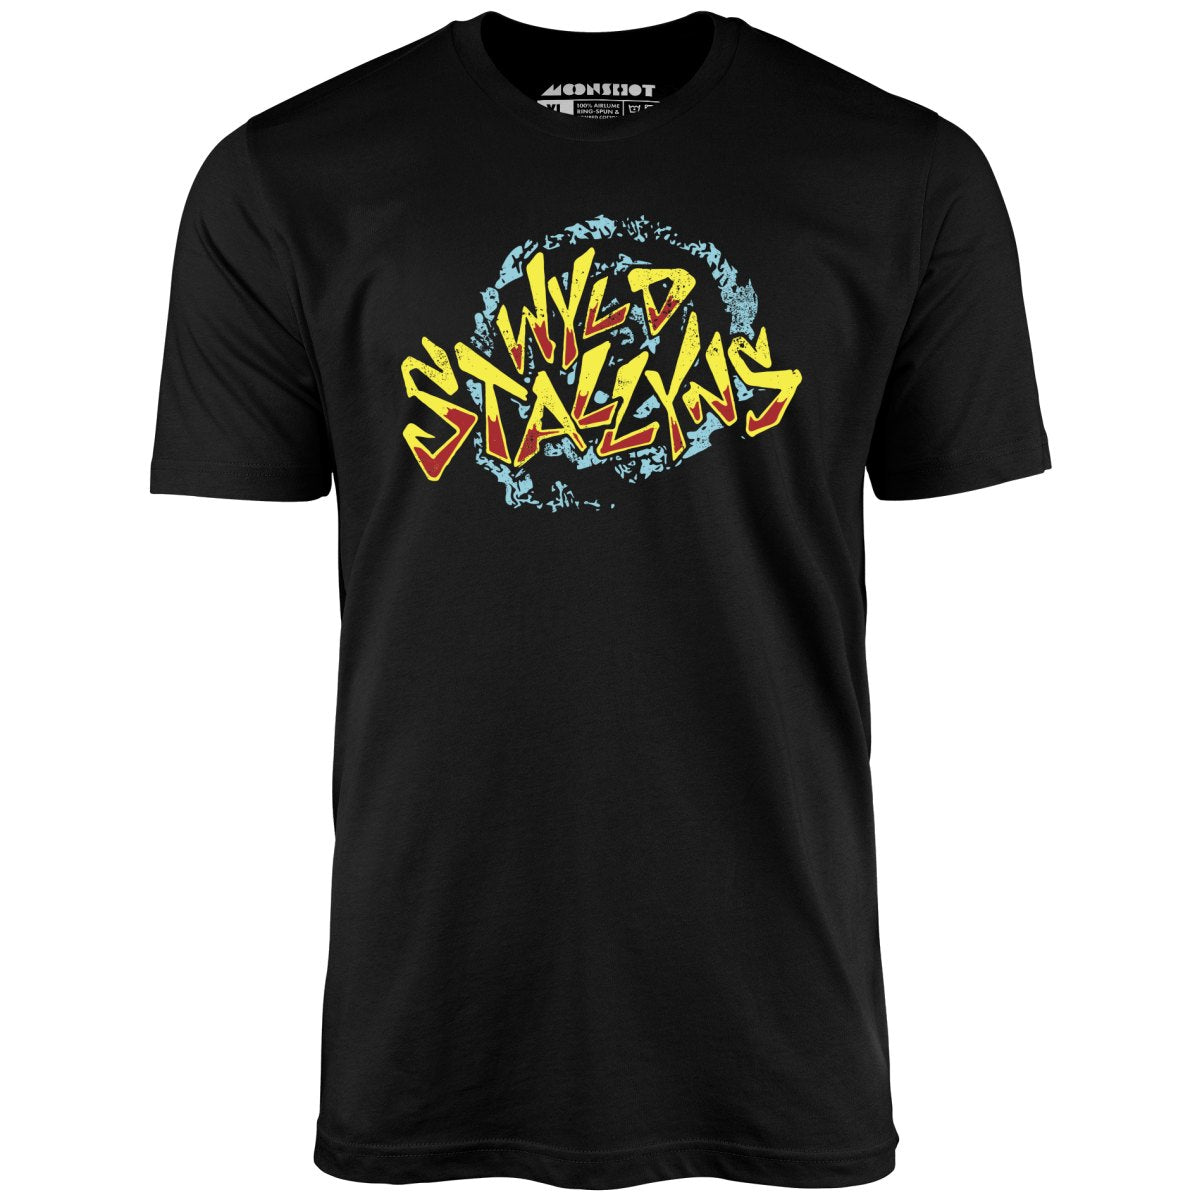 Wyld Stallyns - Unisex T-Shirt